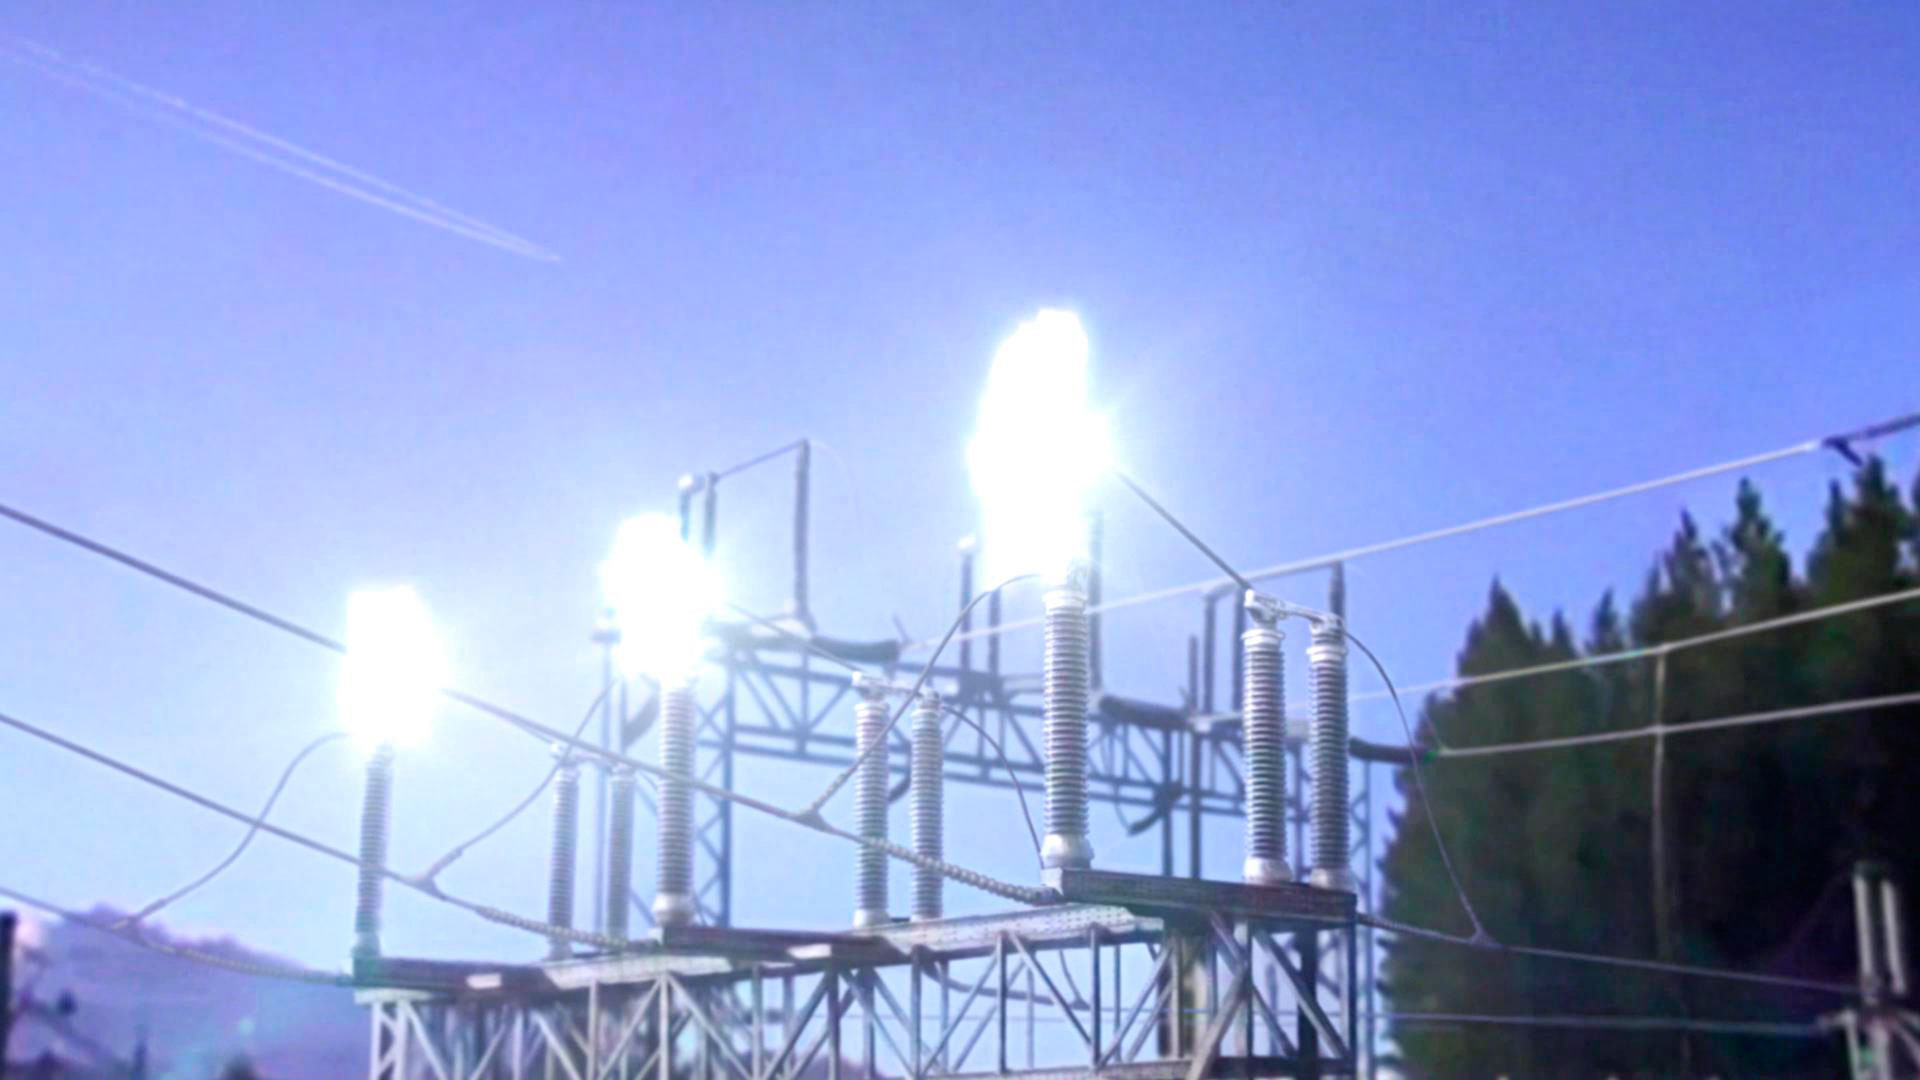 HR-Stamenov, 148 kv. 2013, energy experiment, electrical substation, Bulgaria